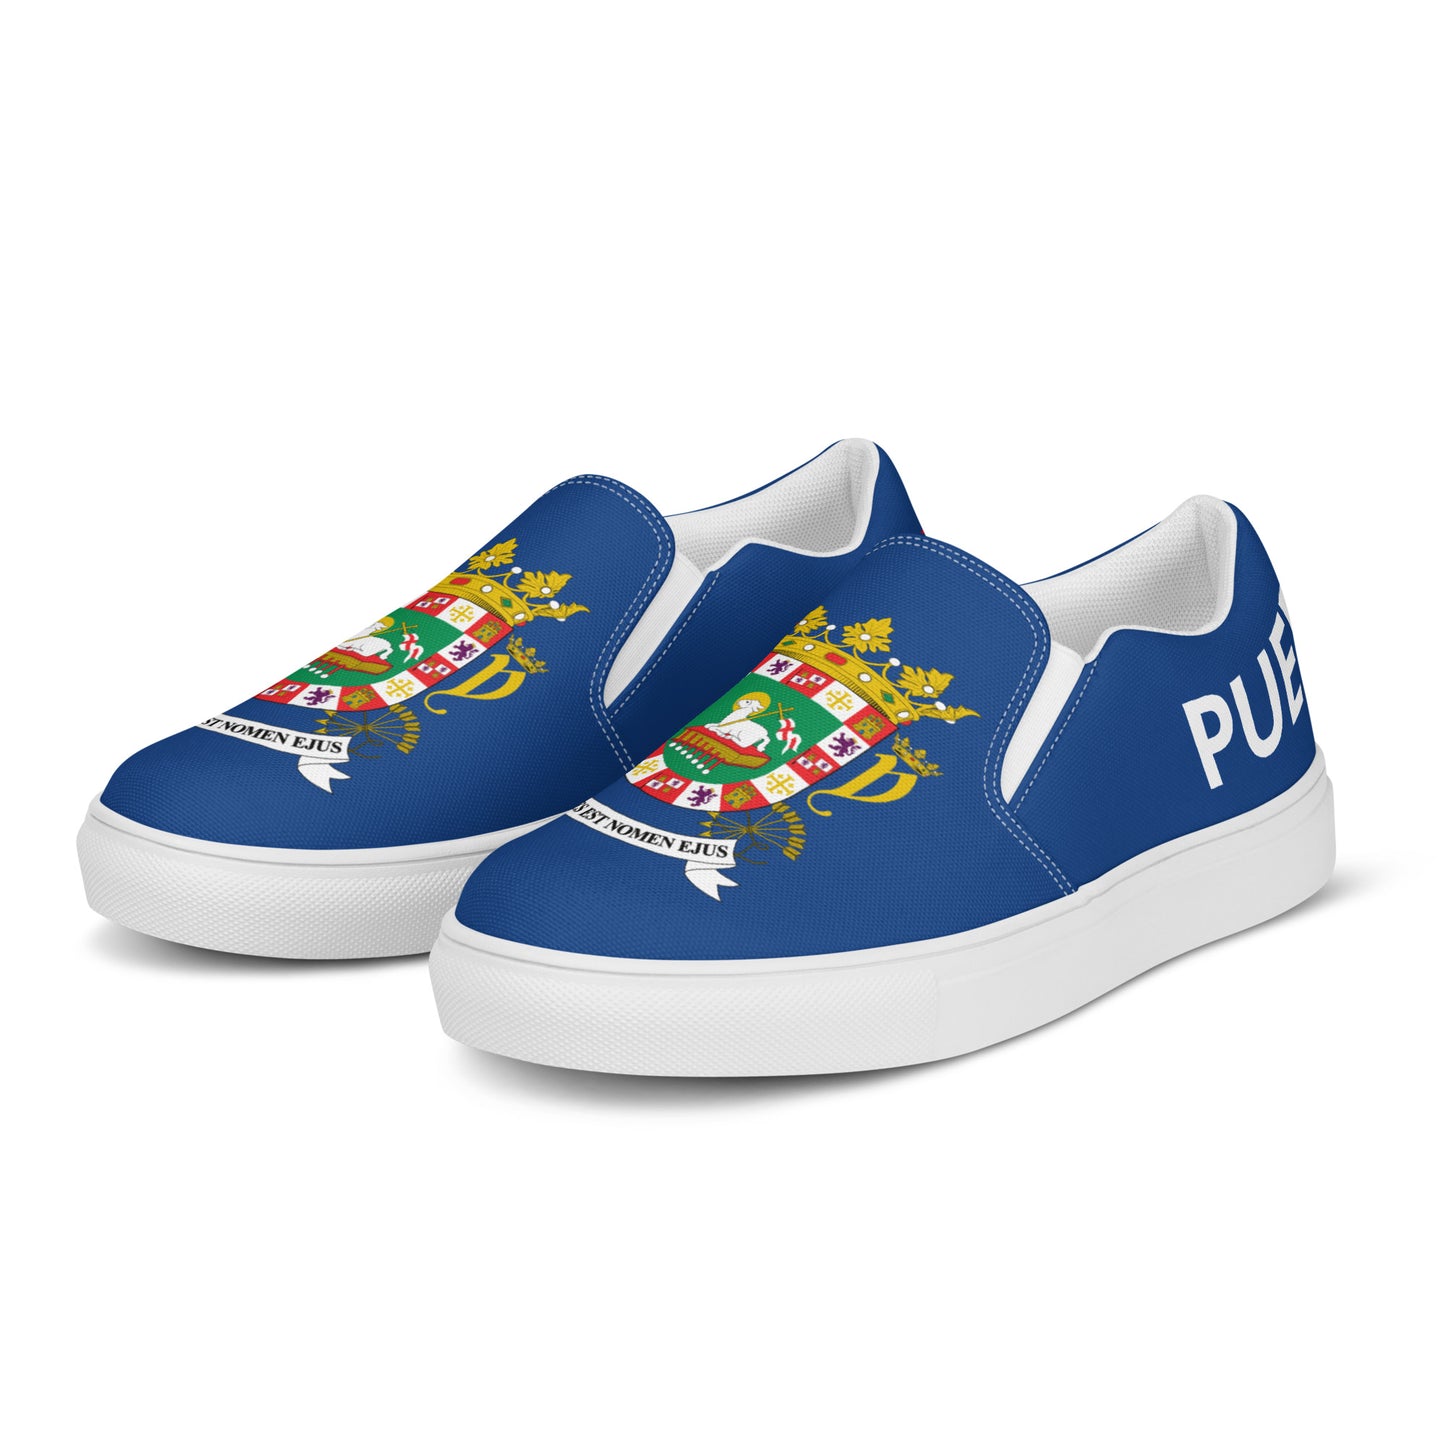 Puerto Rico - Women - Blue - Slip-on shoes